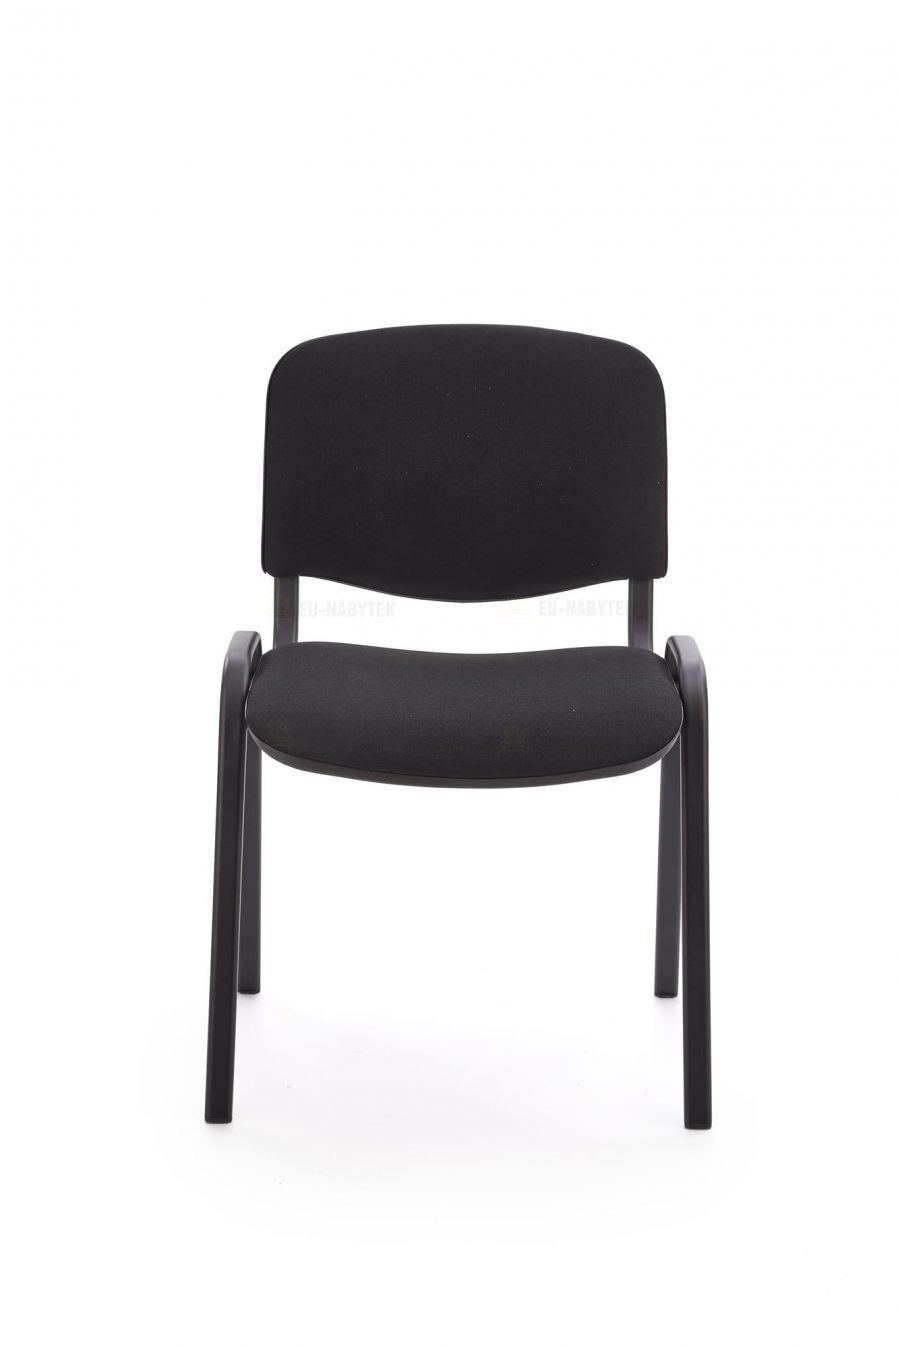 ISO židle černá OBAN EF019